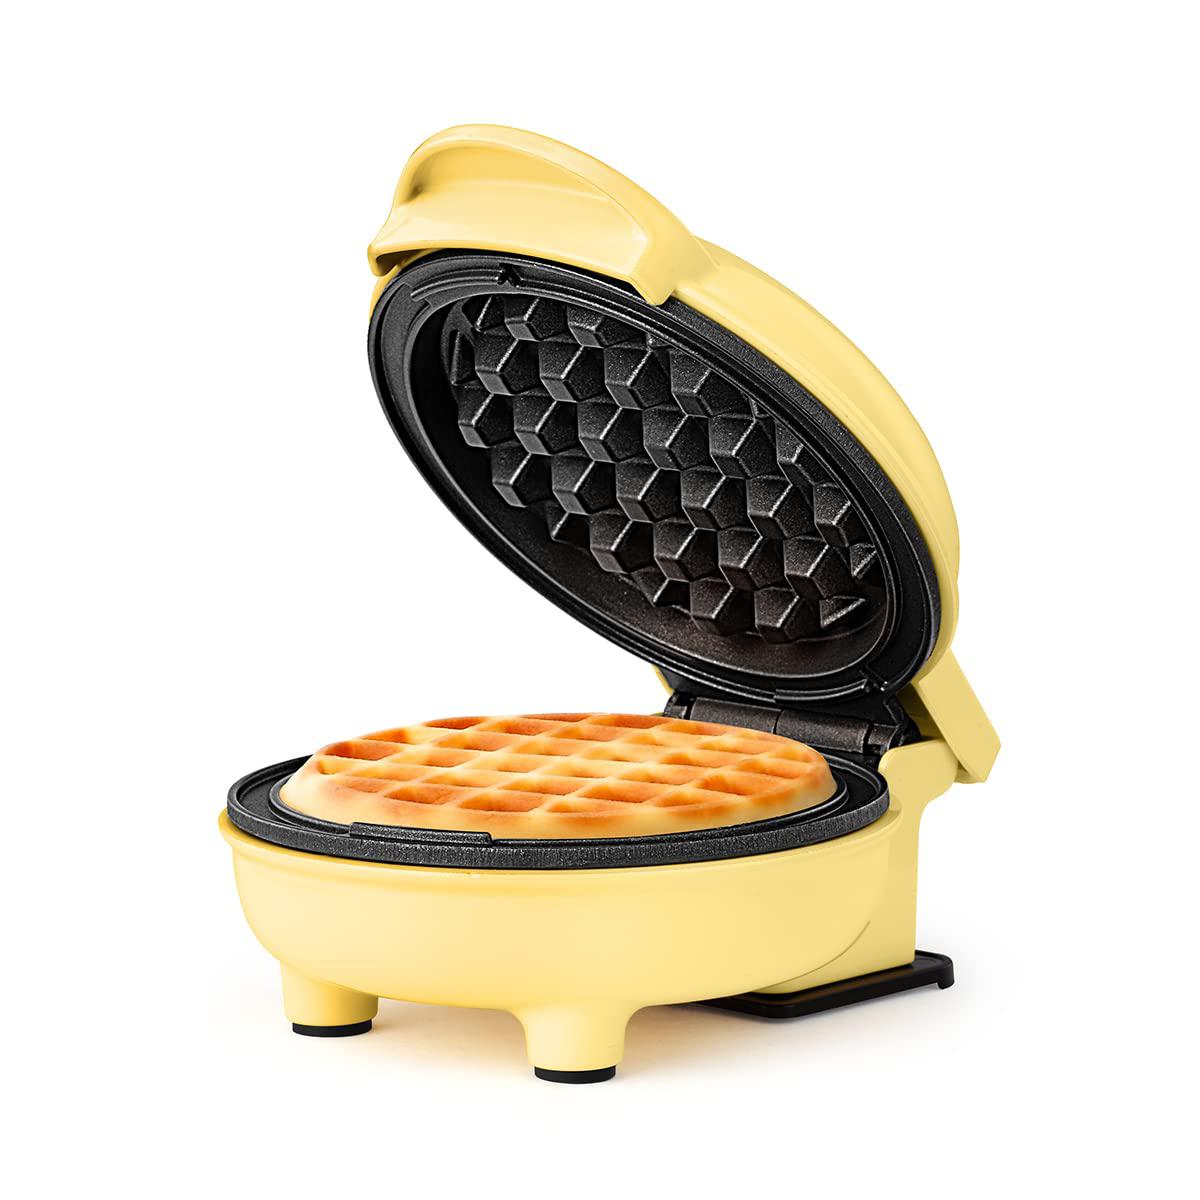 holstein housewares personal non-stick waffle maker, yellow